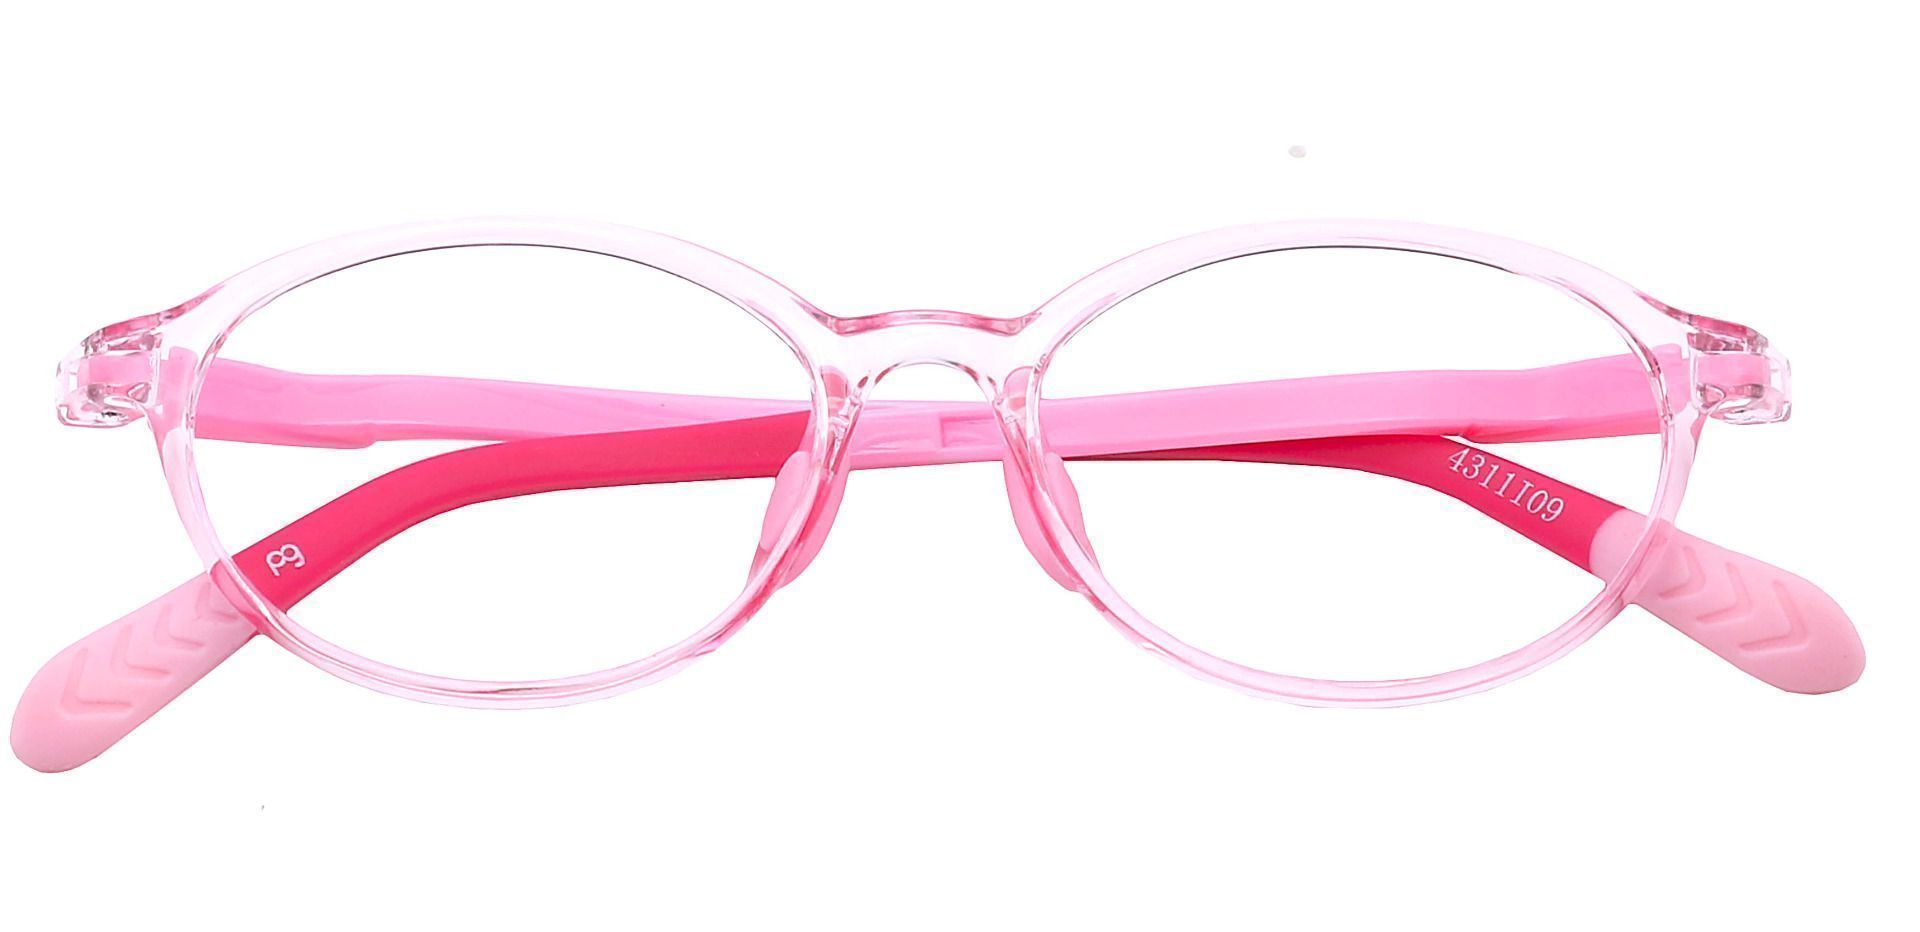 Axel Oval Prescription Glasses - Bubble Gum Pink Crystal